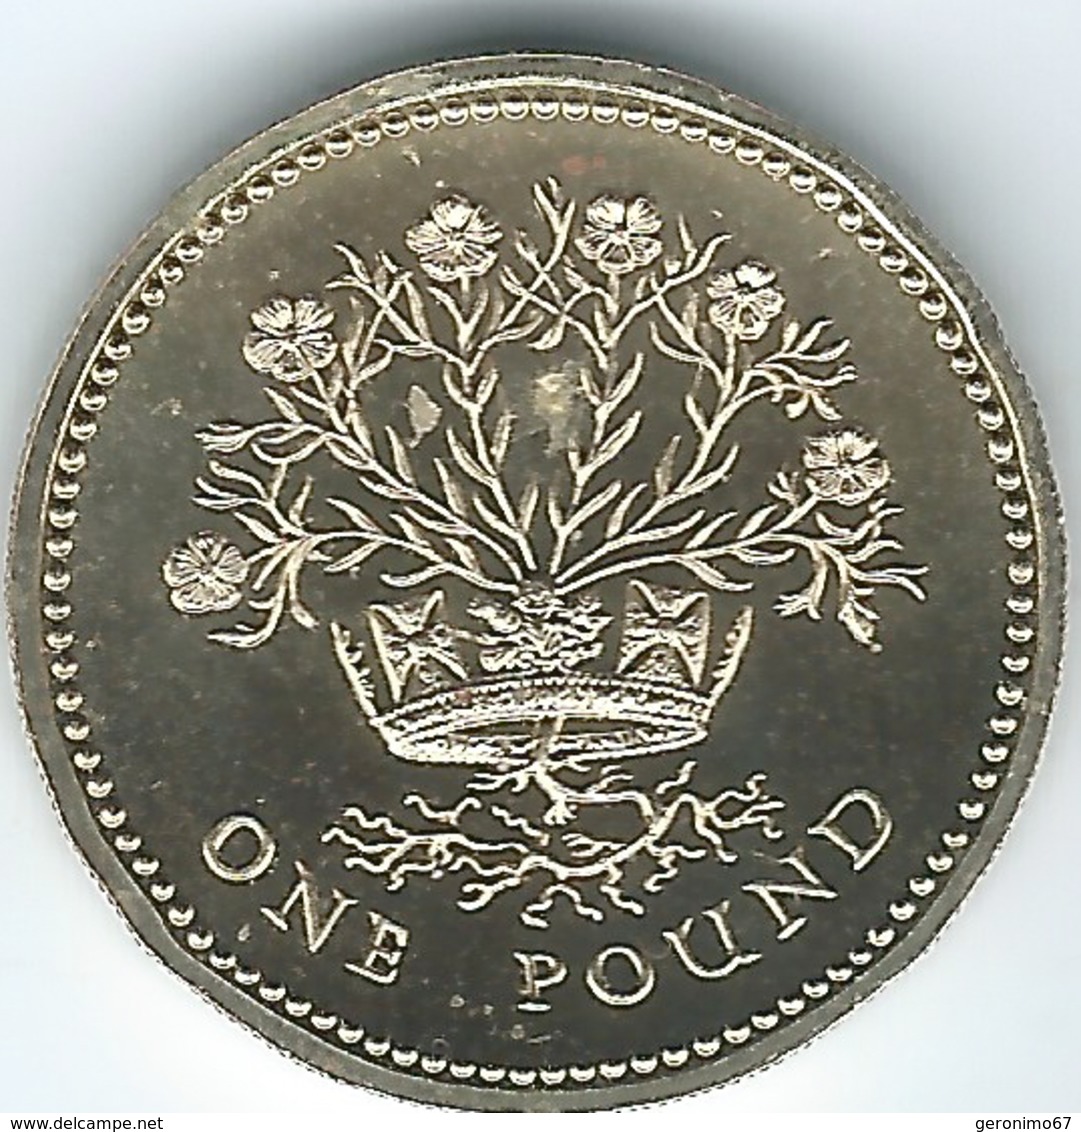 Great Britain / United Kingdom - 1986 - 1 Pound - Elizabeth II - Northern Ireland Flax - KM946 - UNC - 1 Pond